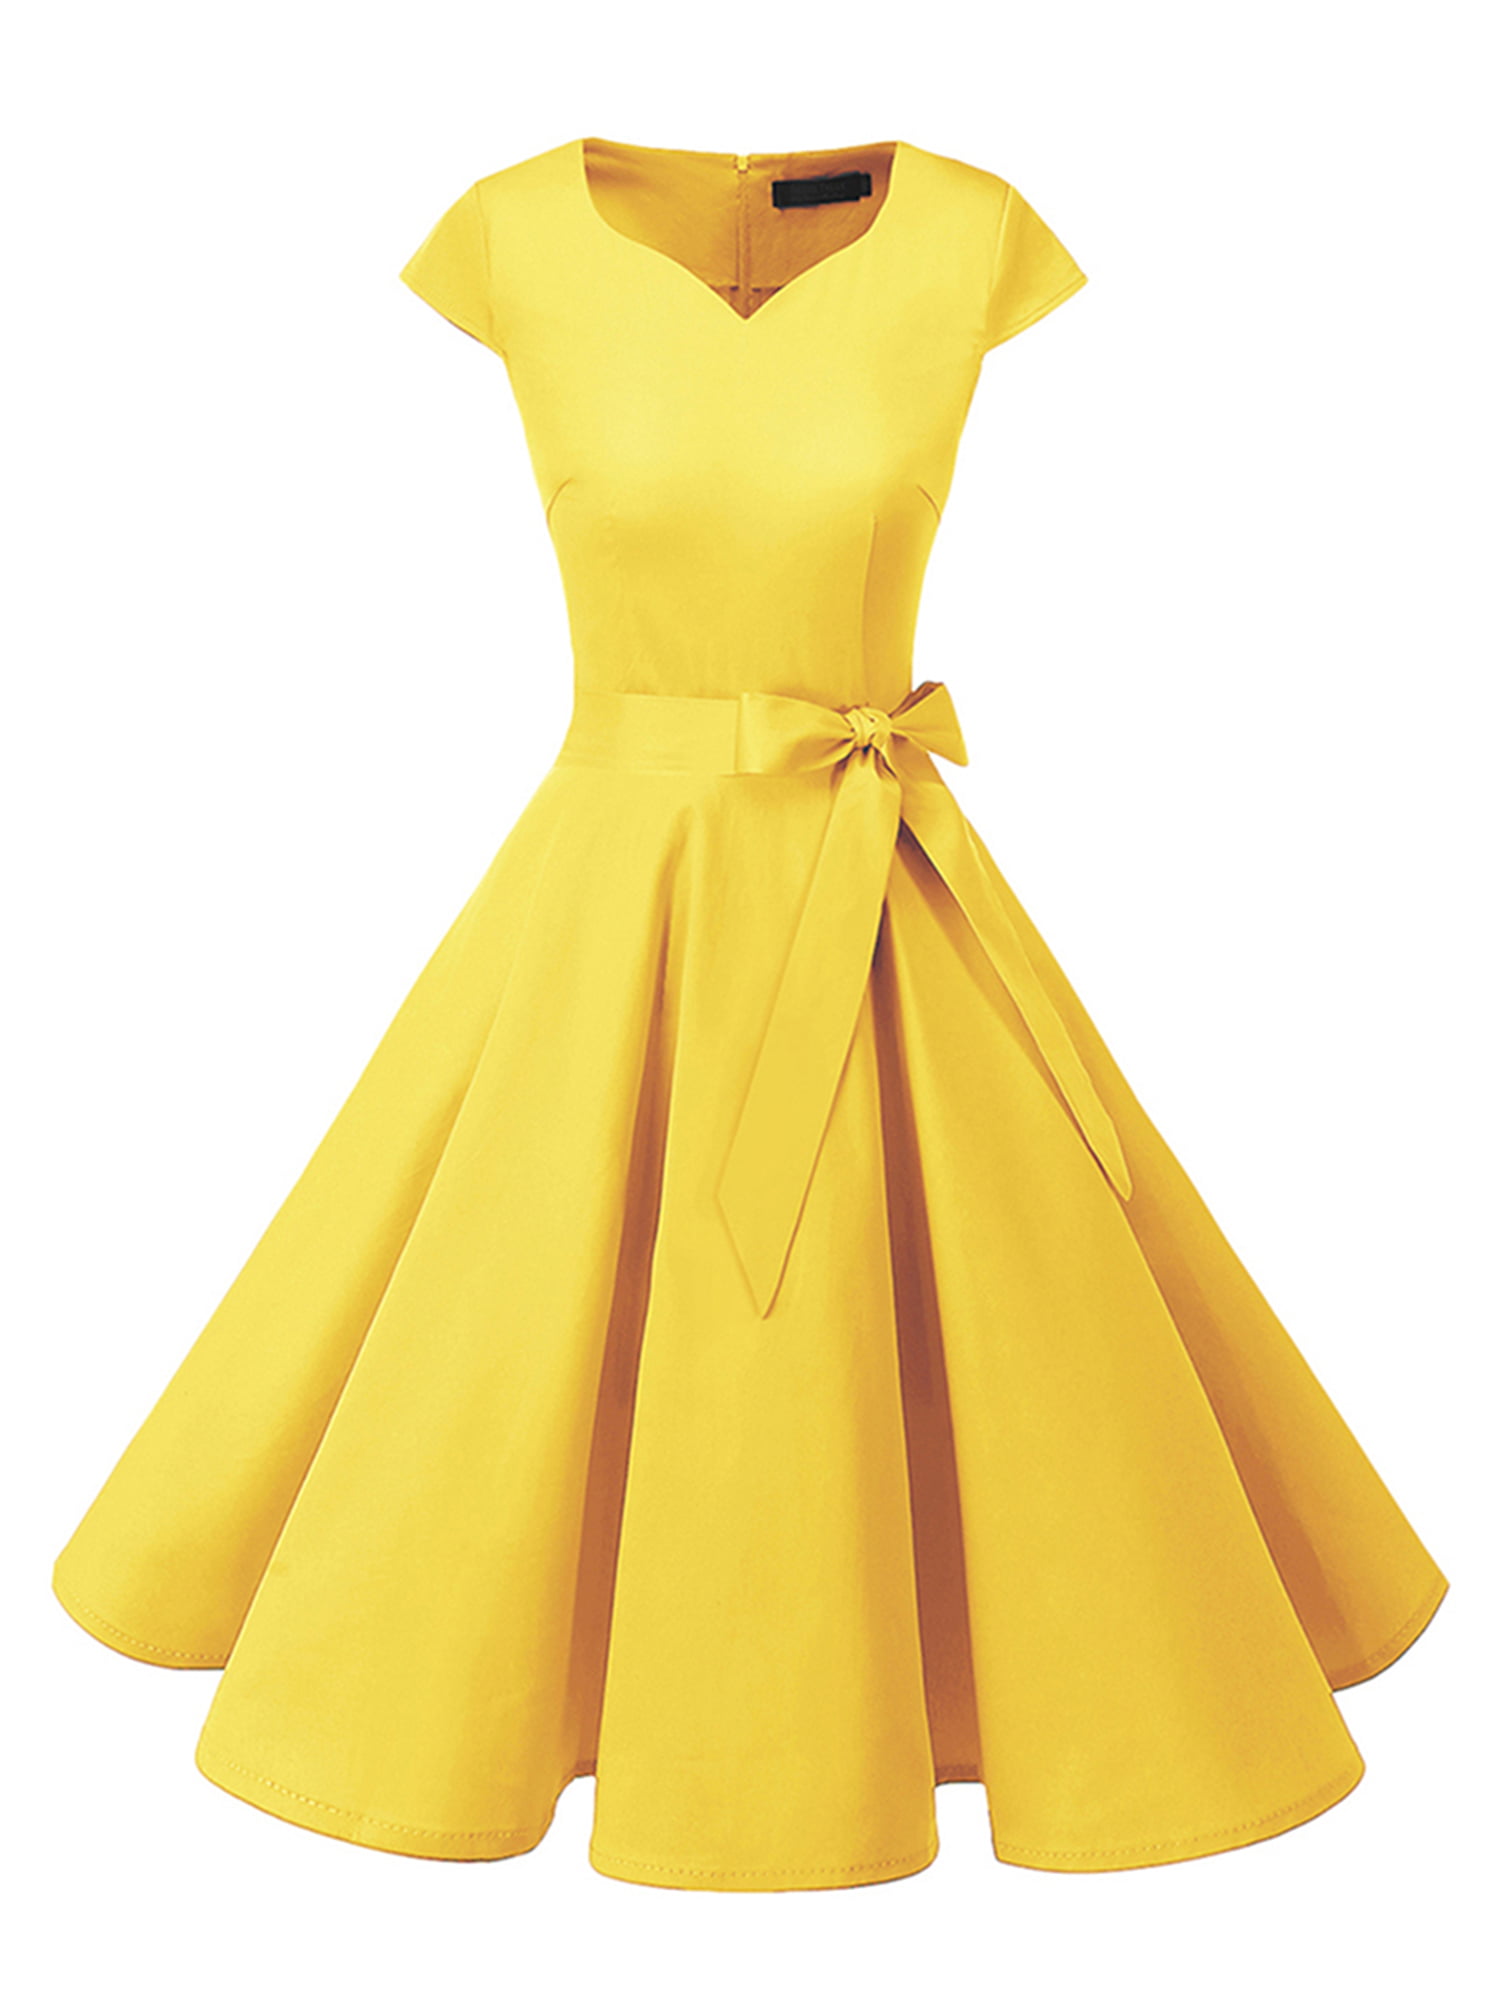 DRESSTELLS® Women's Retro 1950s Rockabilly Bridesmaid Polka Dots Vintage Cocktail Dress Cap-Sleeves 